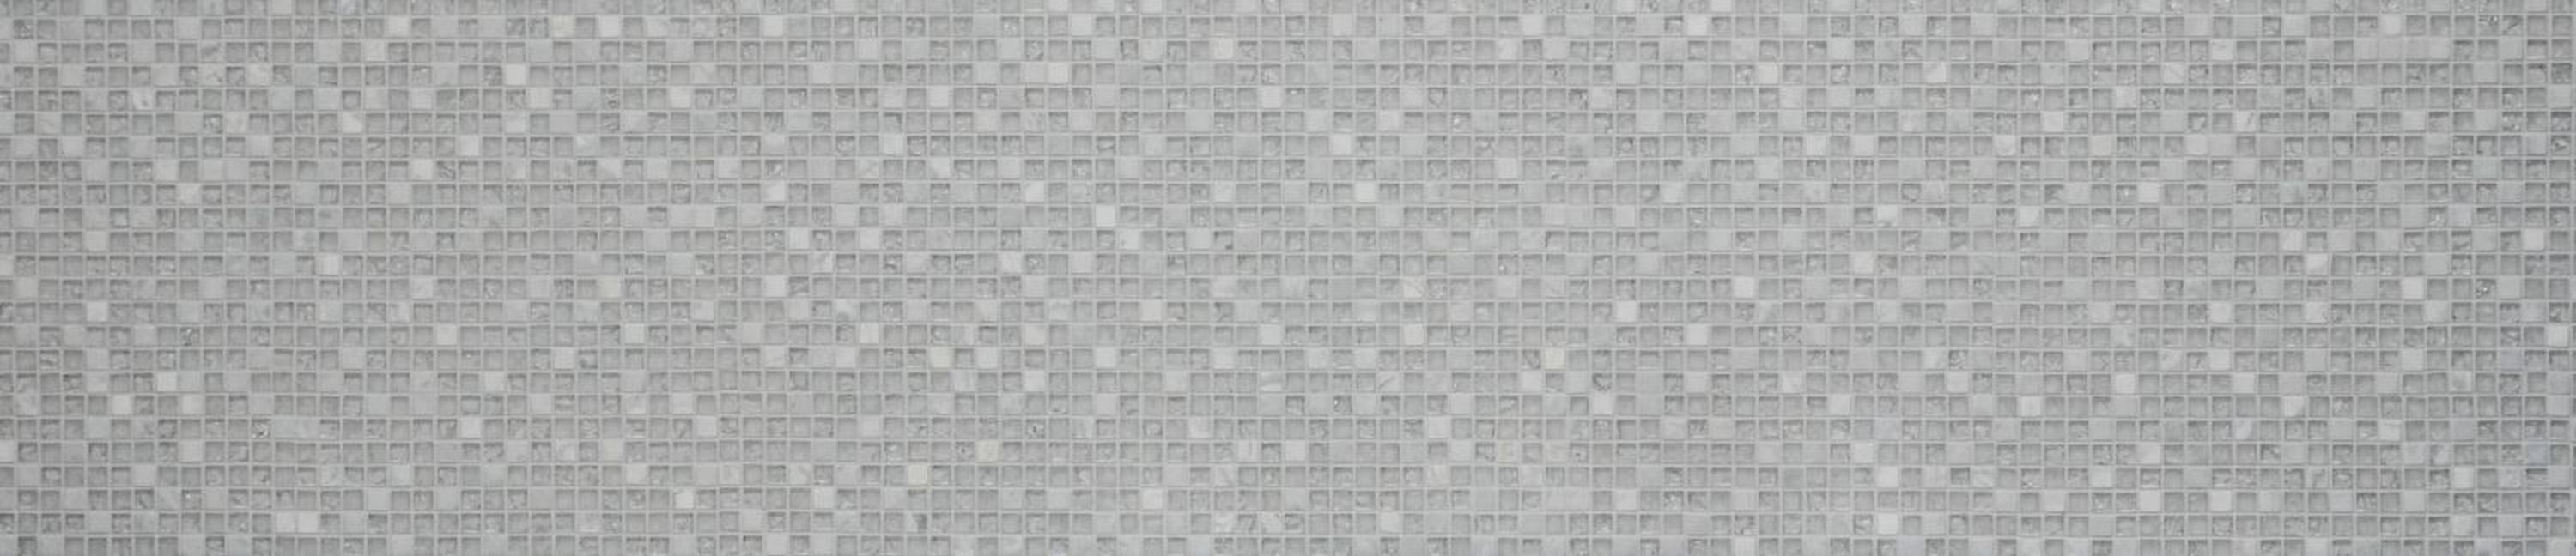 Mosaikfliesen Mosani Glasmosaik klar Mosaikfliese Naturstein weiß